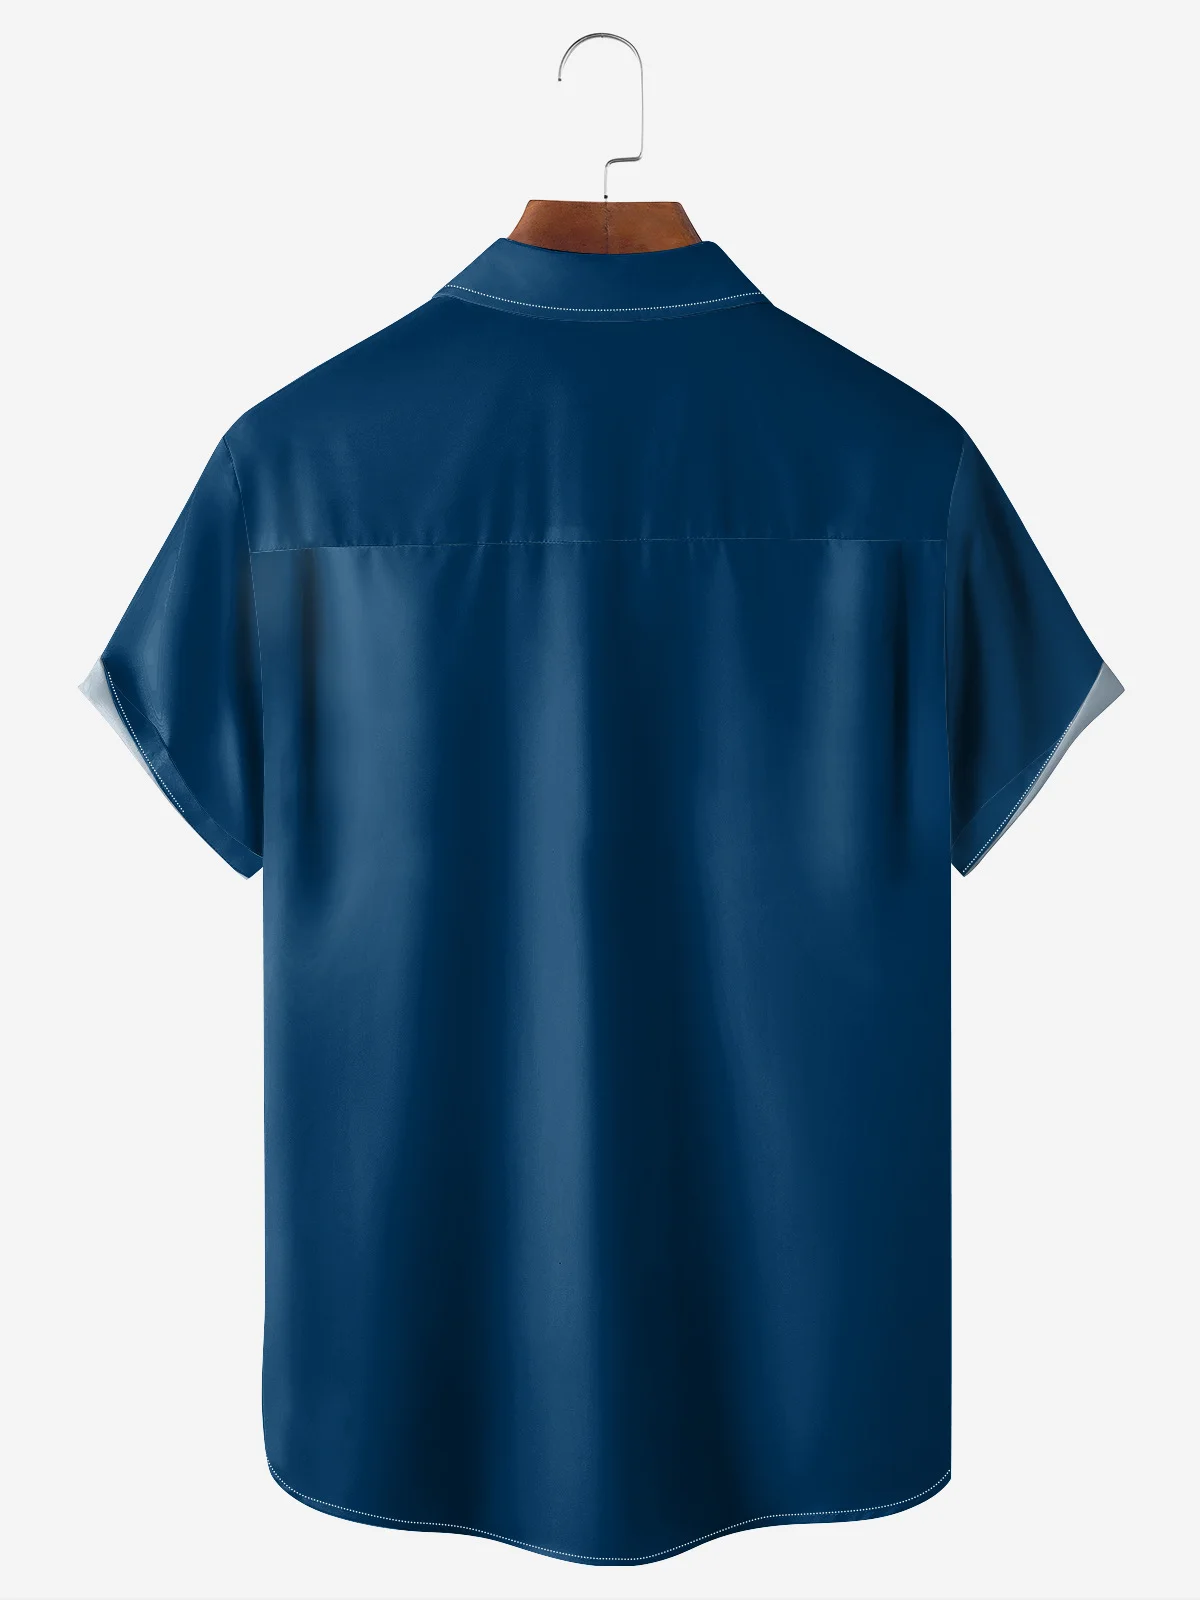 Hardaddy Art Medieval Geometric Chest Pocket Short Sleeve Bowling Shirt